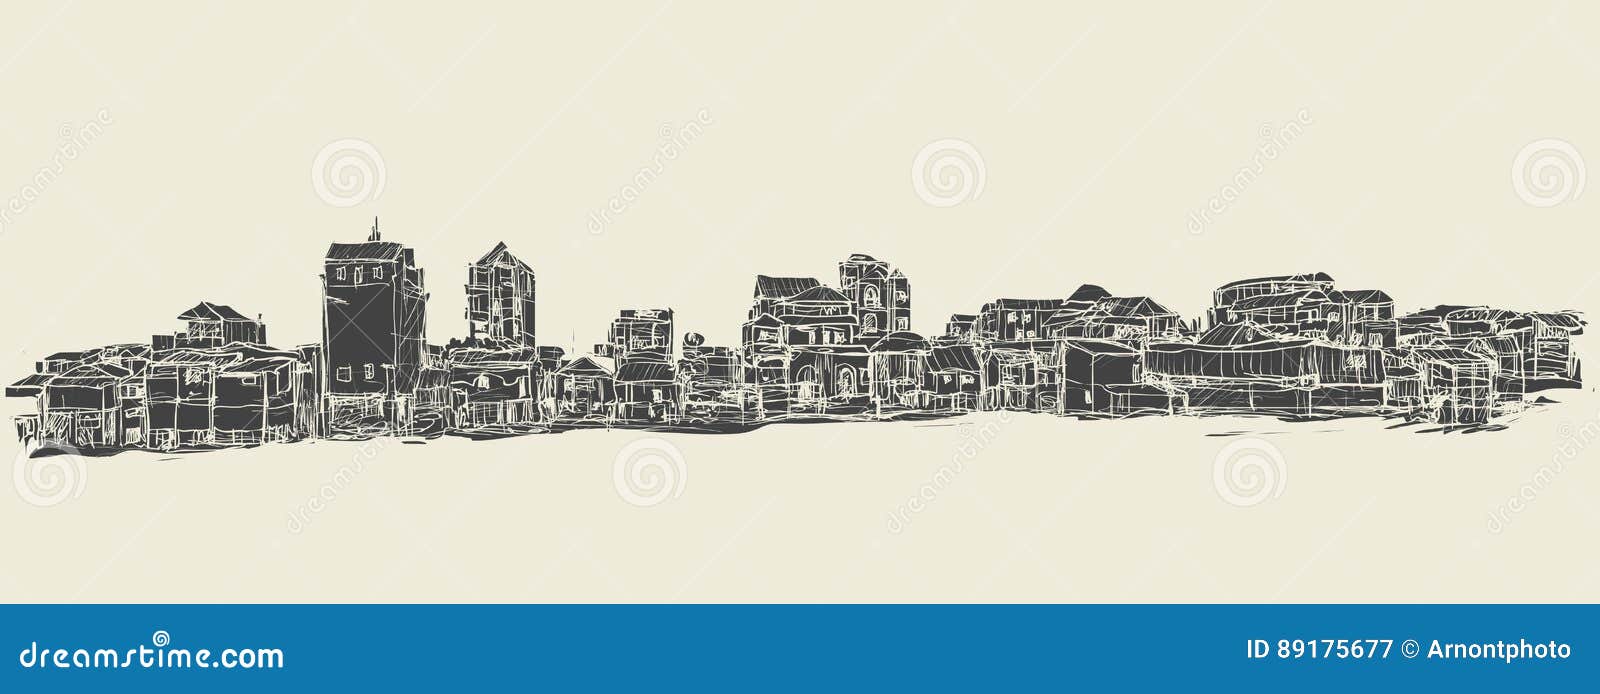 sketch of townscape in phnom penh slum, free hand draw